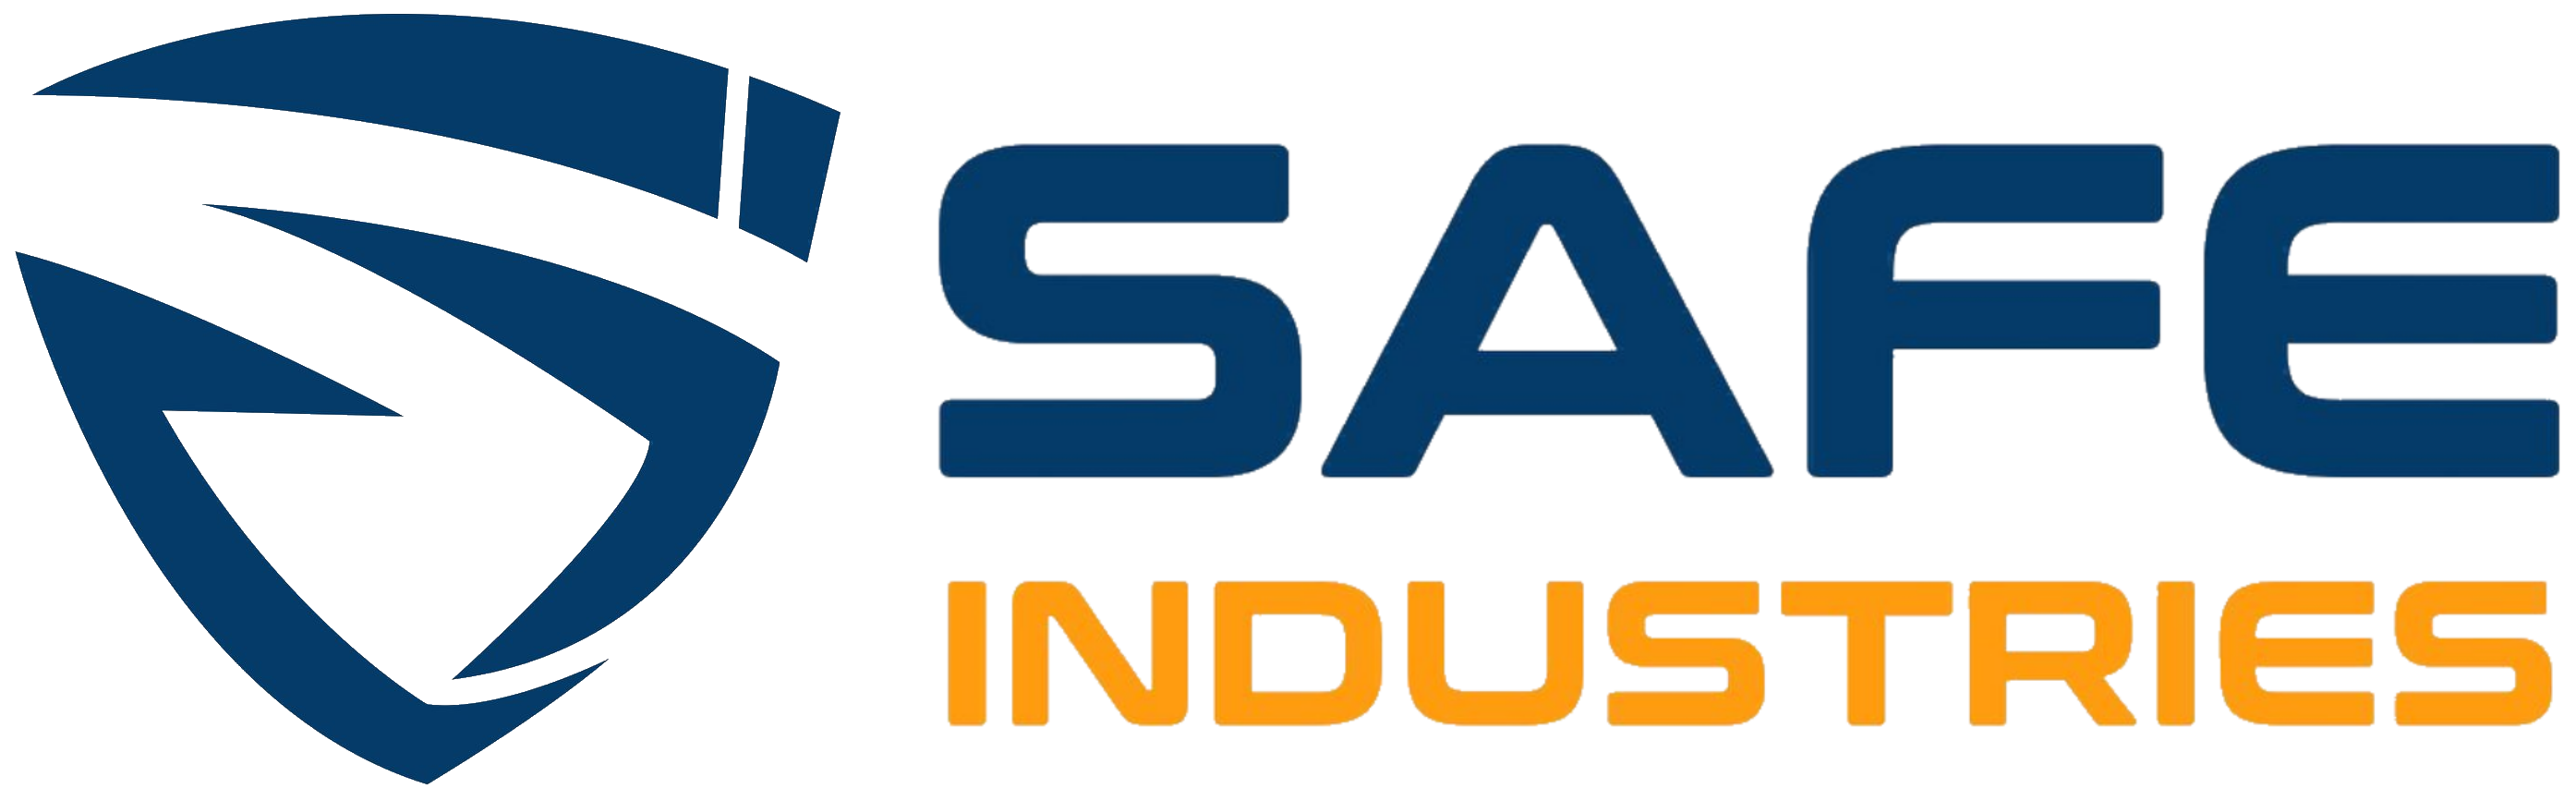 Safe Industries